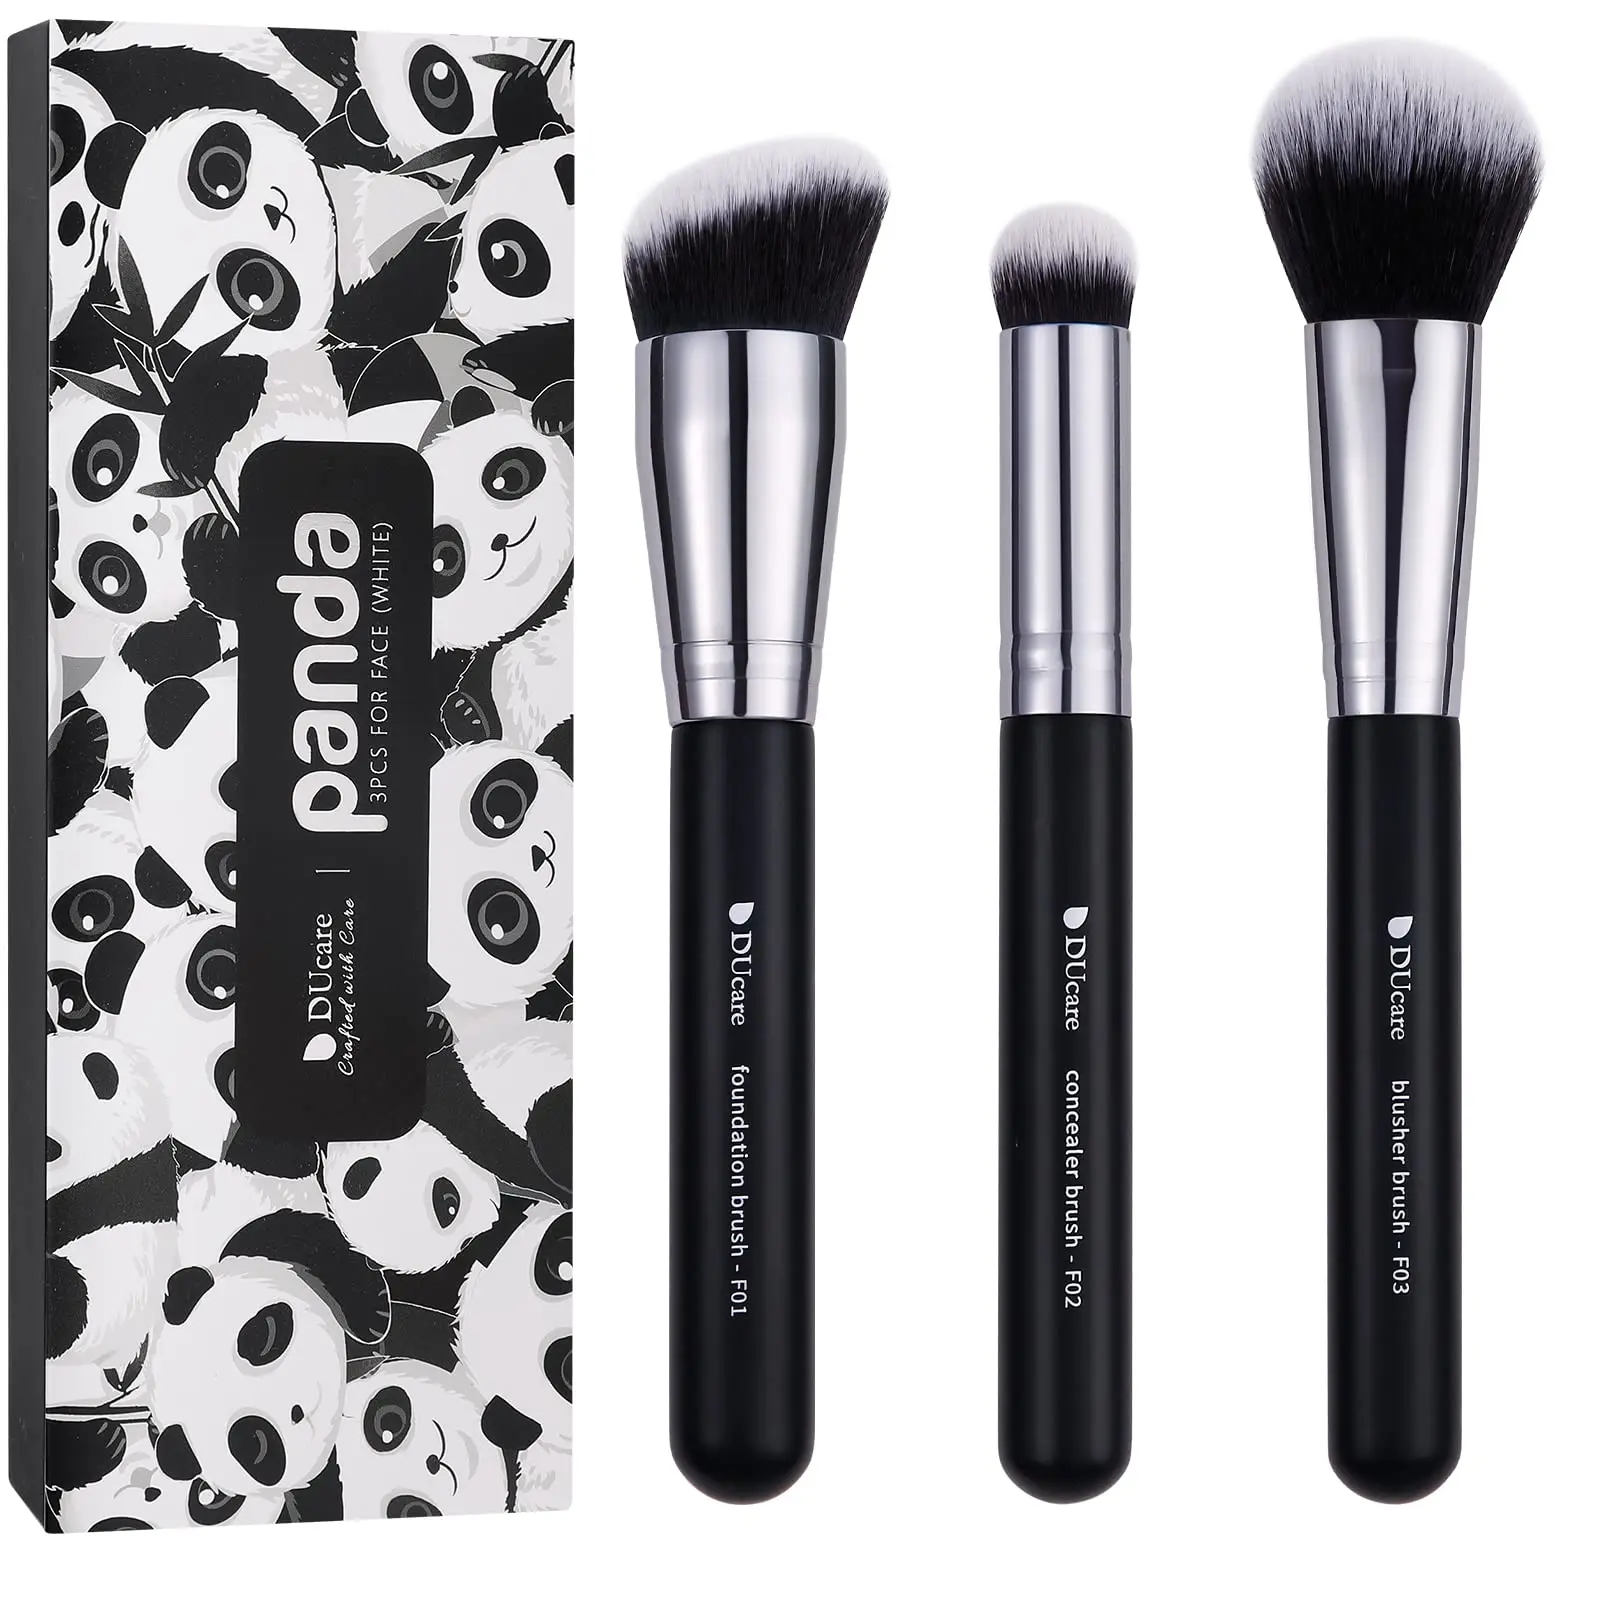 

Customize LOGO Foundation Concealer Brush Blusher Brush Face Kabuki Blush Travel Contour Liquid Blending Makeup Brush Set